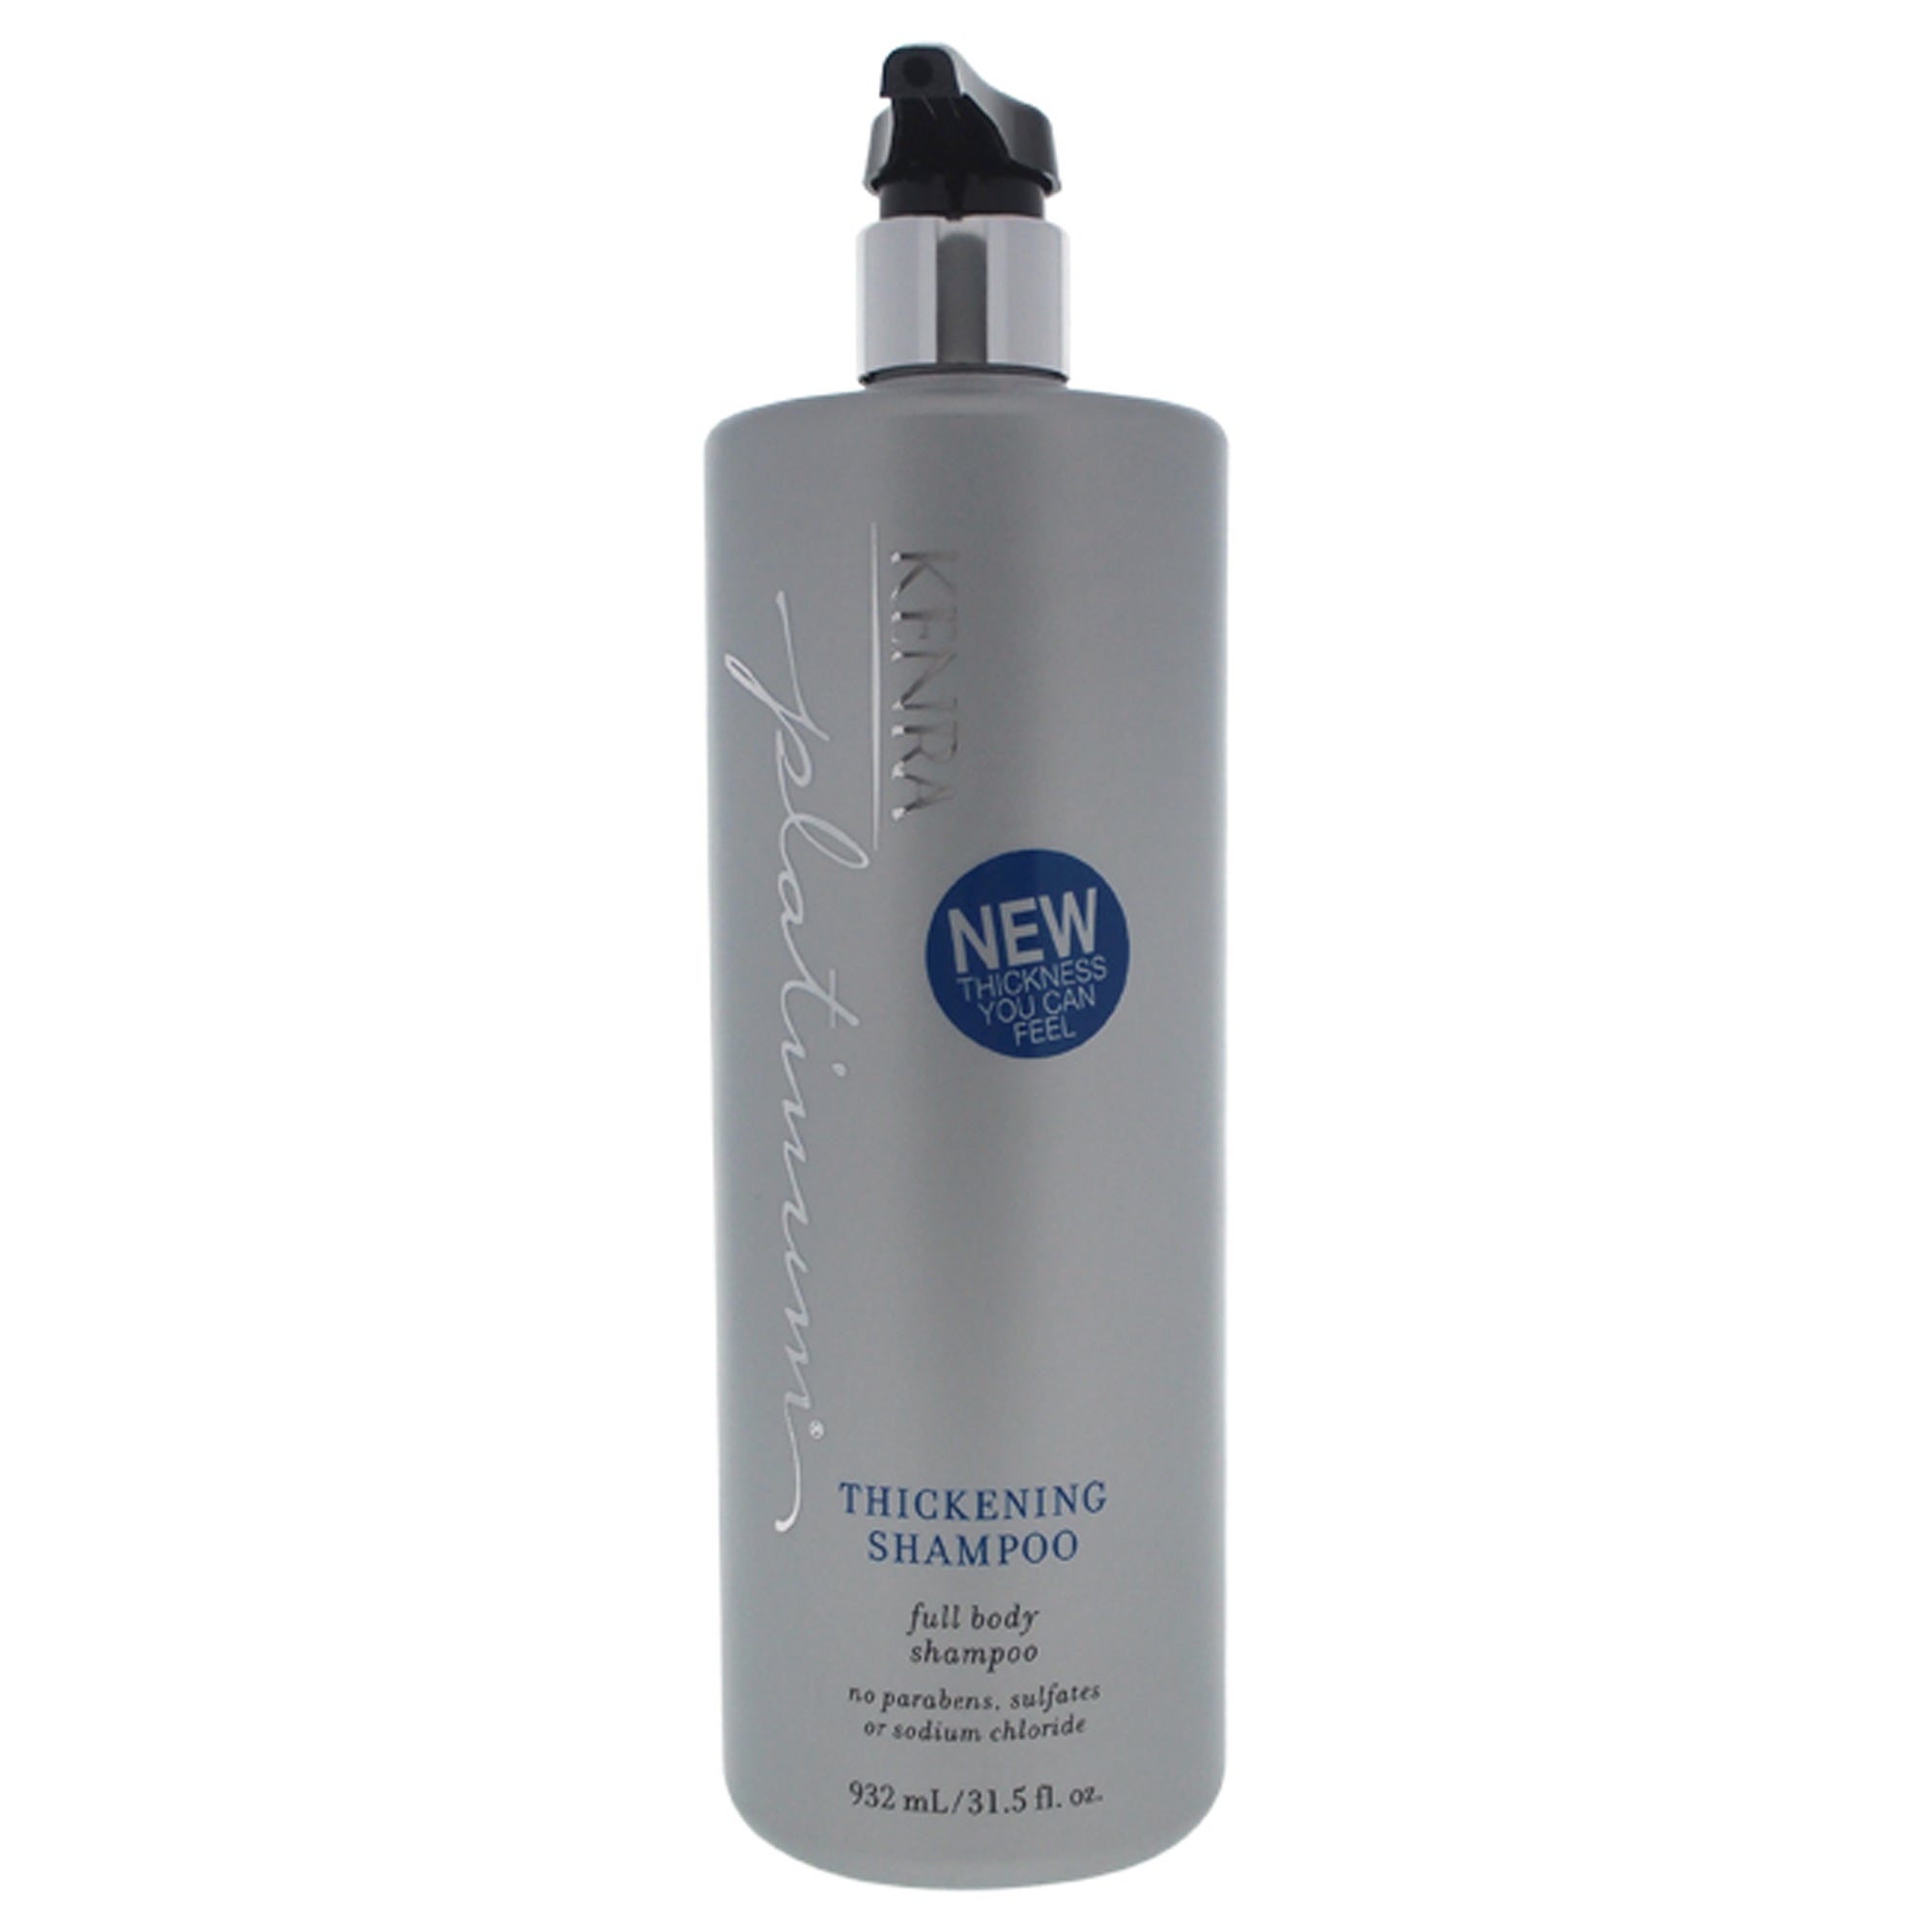 Platinum Thickening Shampoo by Kenra for Unisex 31.5 oz Shampoo